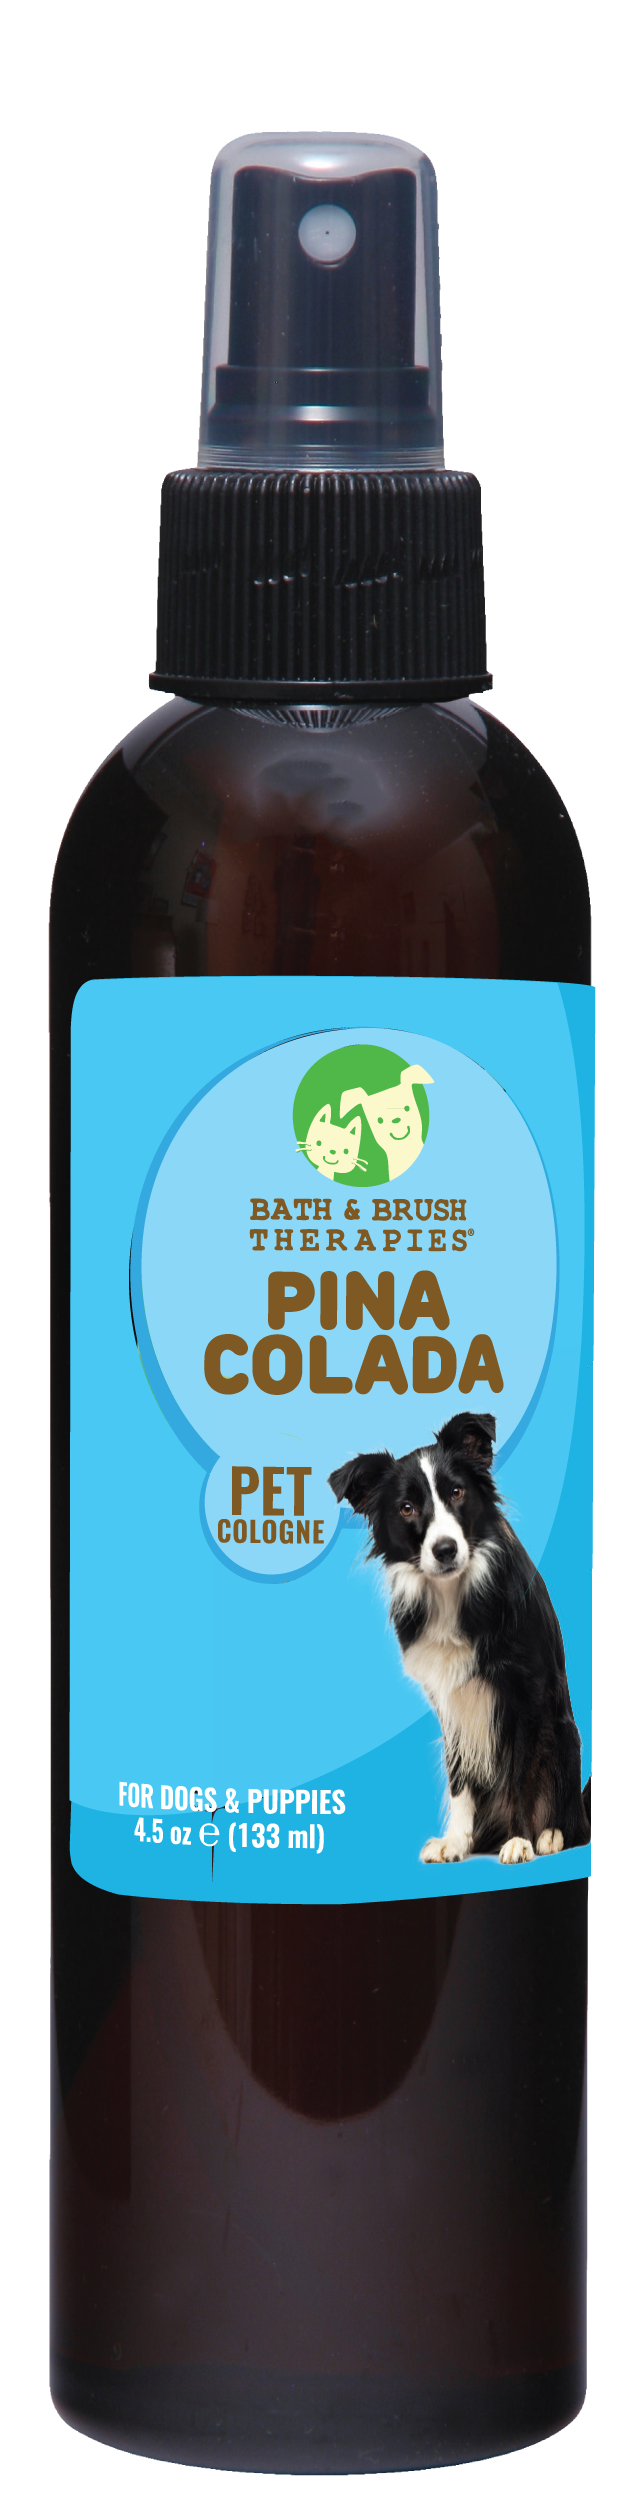 Pina Colada Pet Cologne